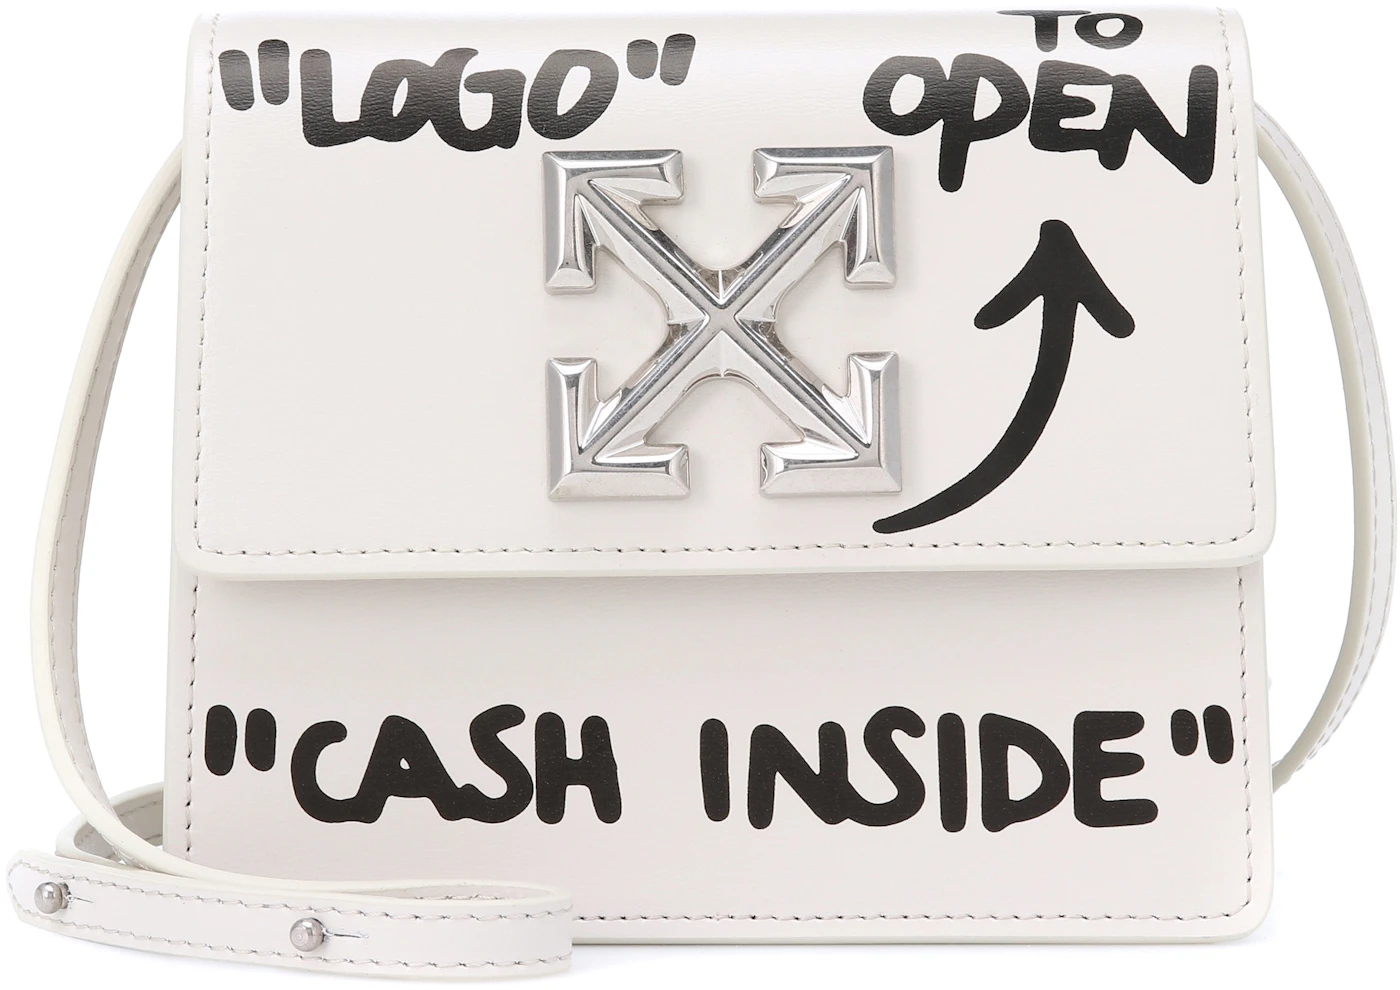 Túi Off white “ Cash Inside” Bag Jitney 2.8